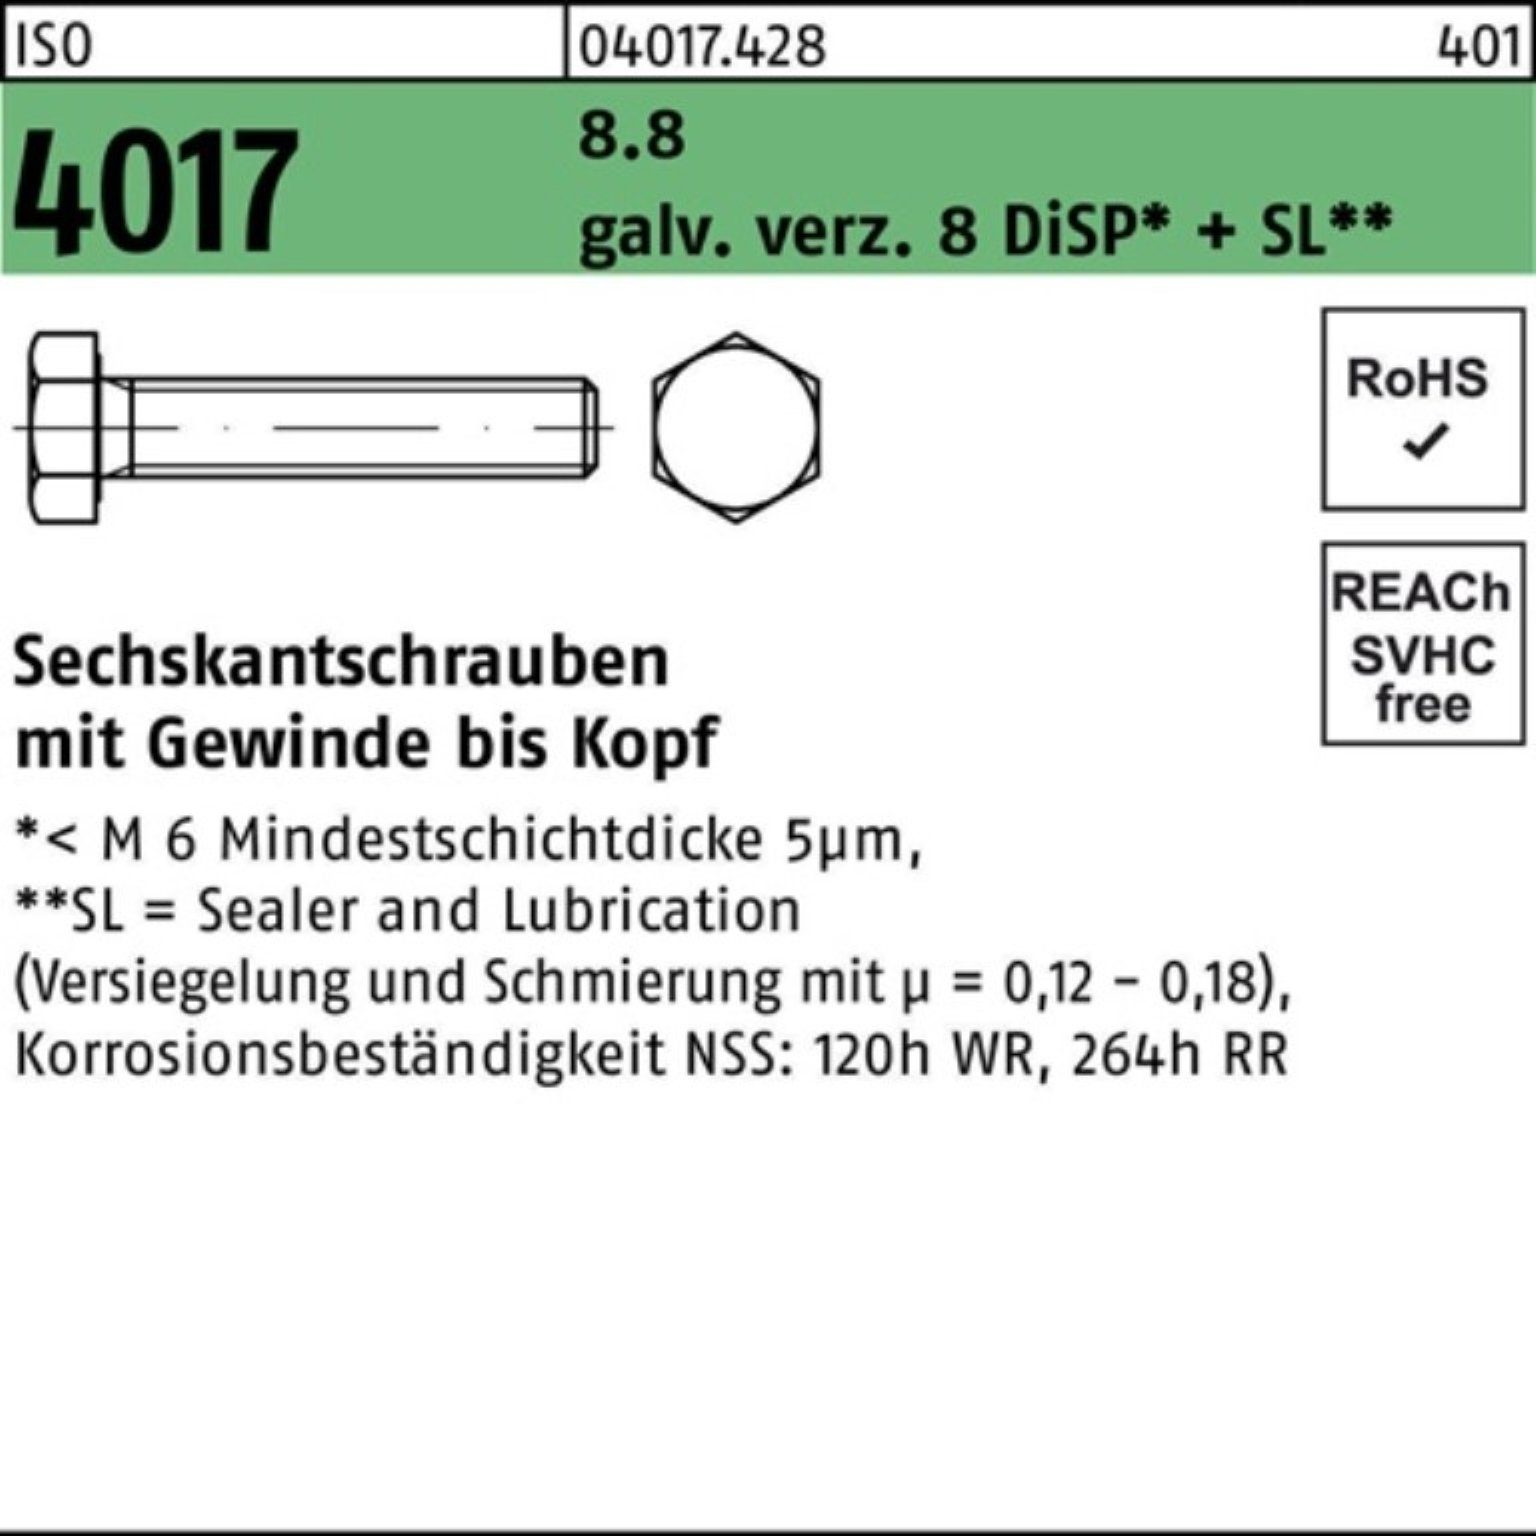 Bufab Sechskantschraube 100er 8 Pack galv.verz. Sechskantschraube VG 110 DiS M10x 8.8 ISO 4017